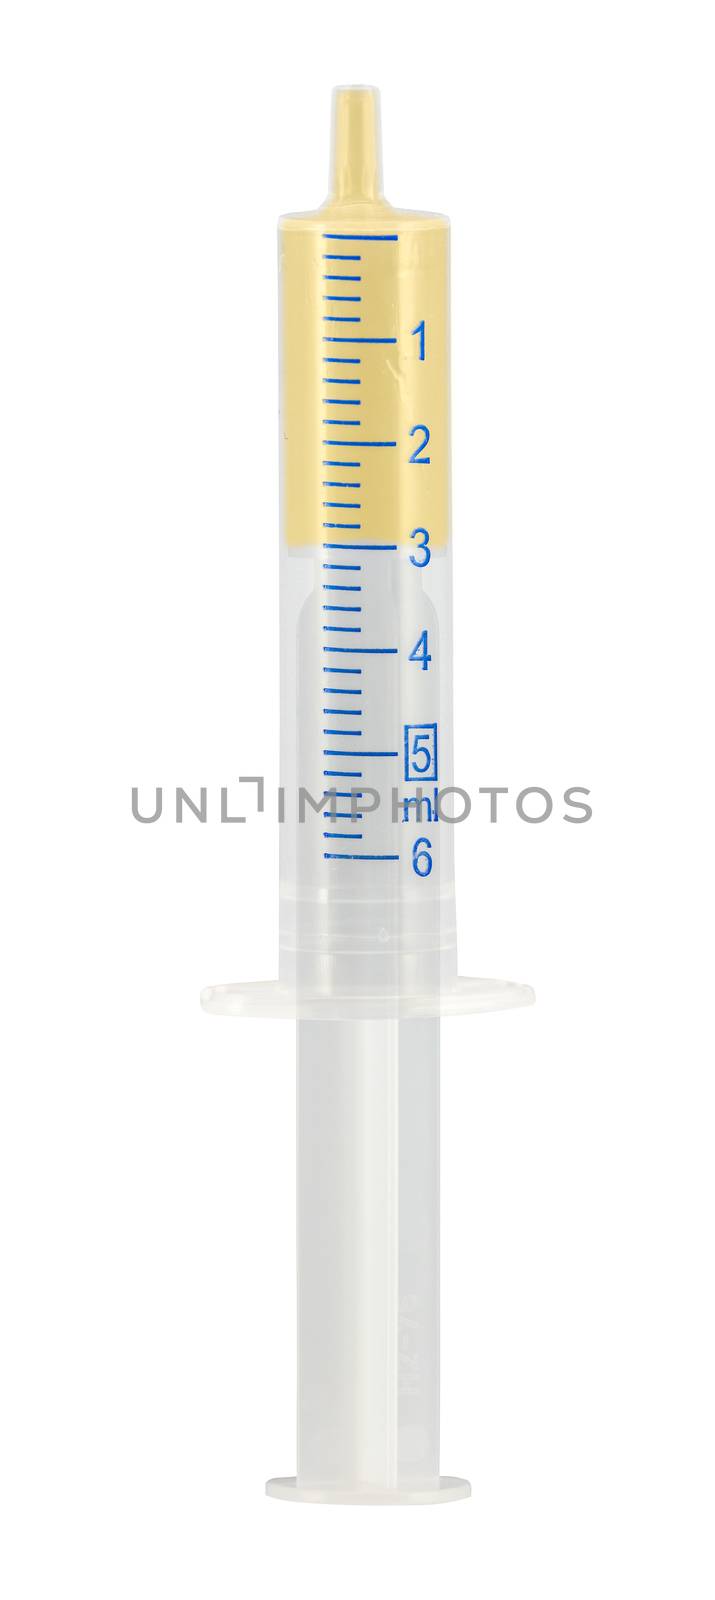 Isolated Syringe With Medication by mrdoomits